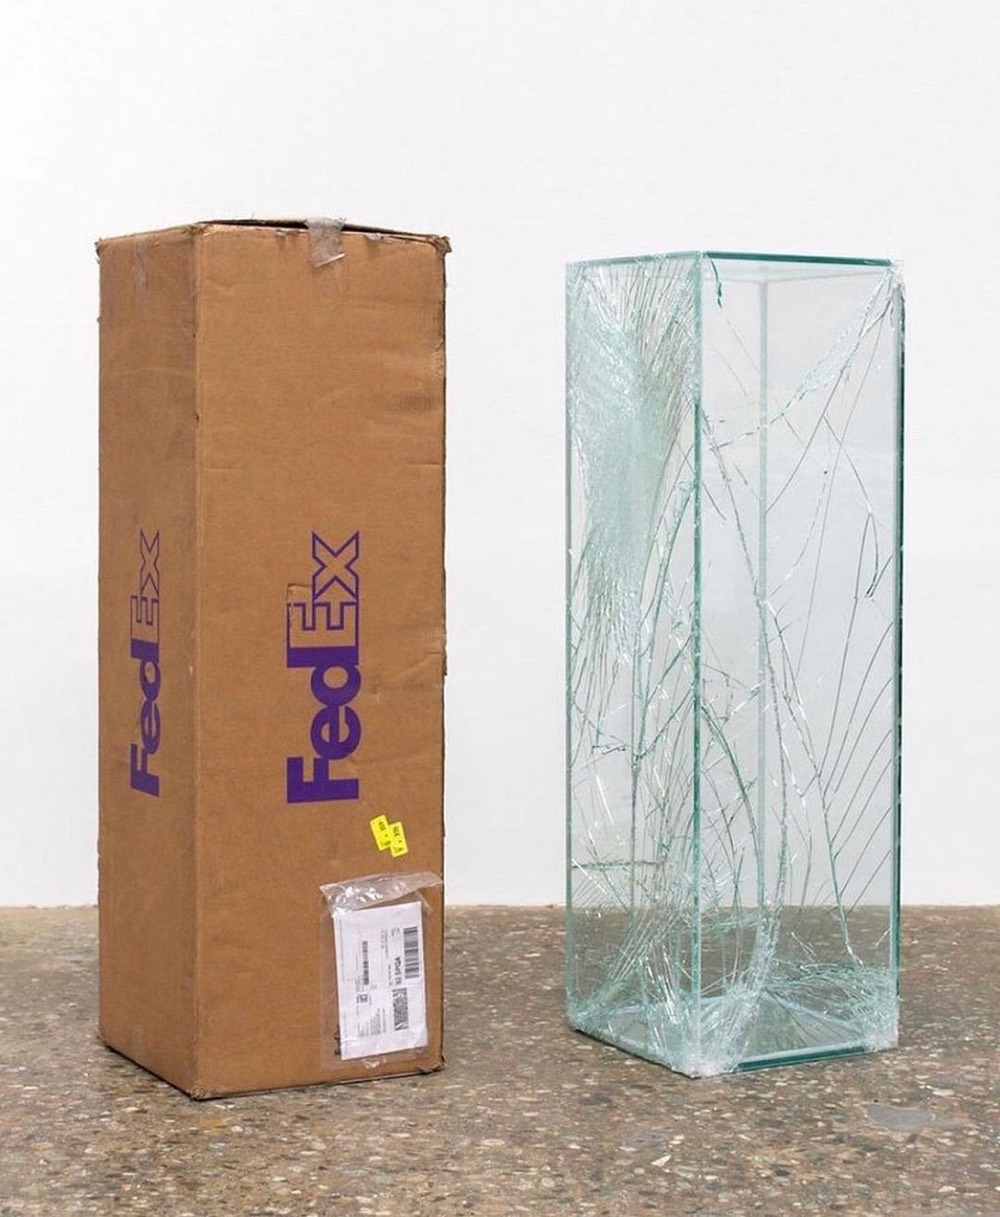 Walead Beshty's FedEx artworks